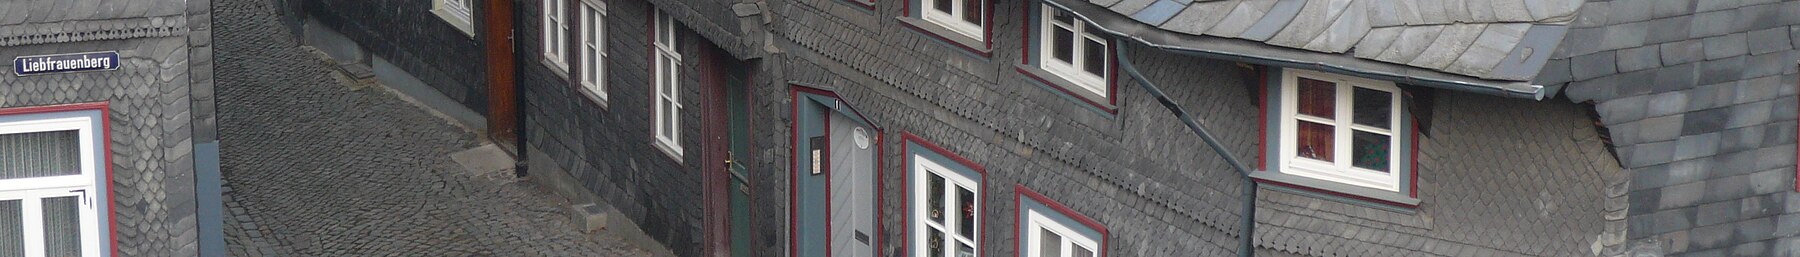 Goslar banner.jpg